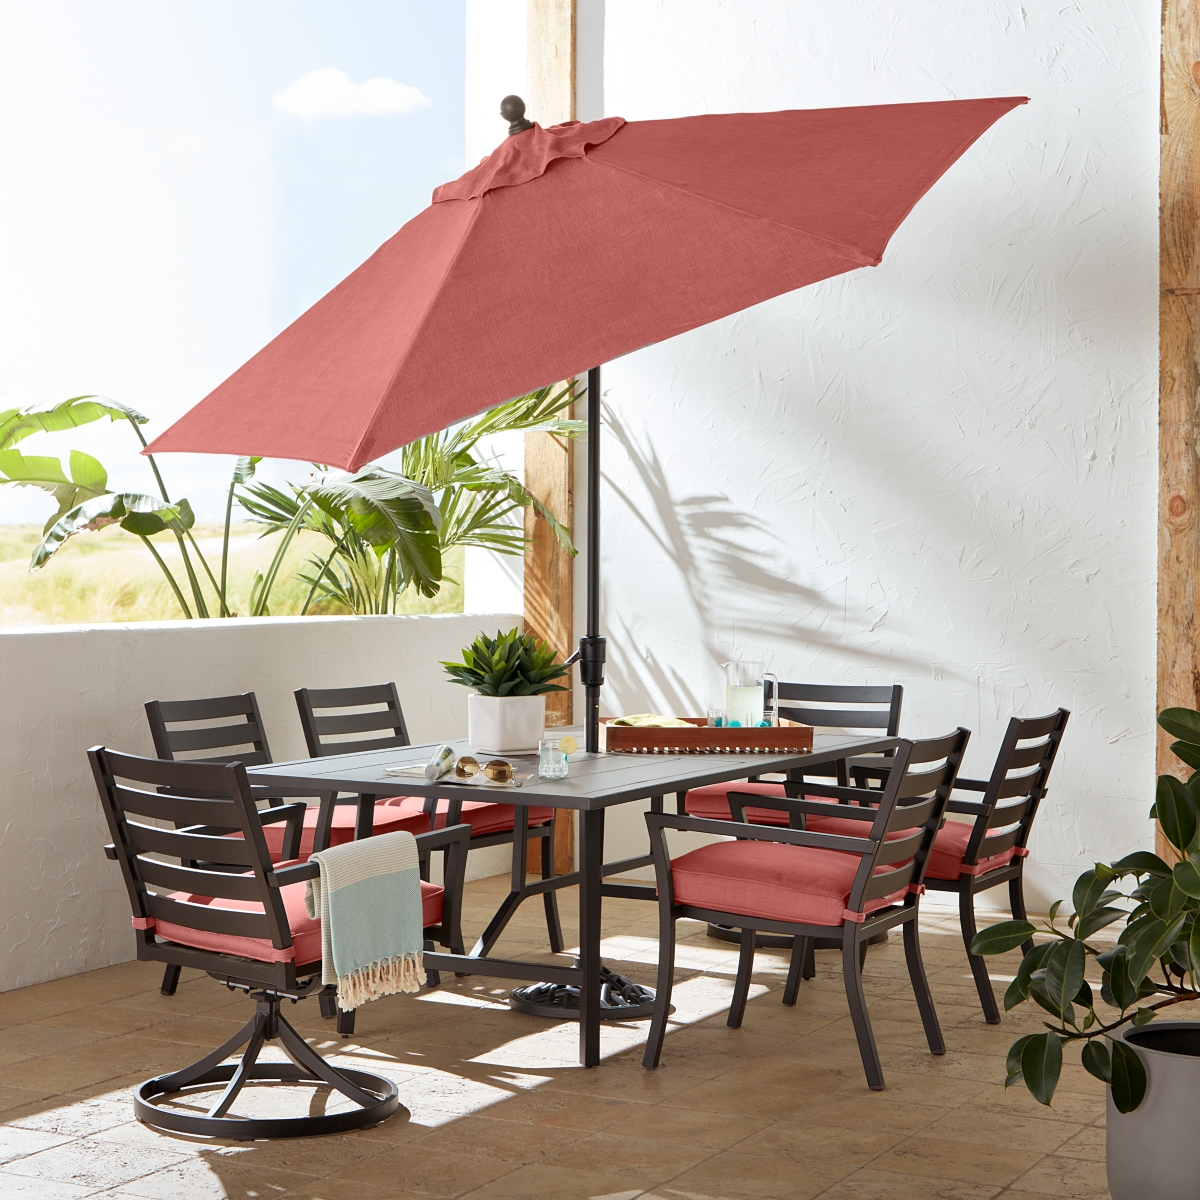 Shop Agio Astaire Outdoor 9' Umbrella + Umbrella Base In Straw Natural